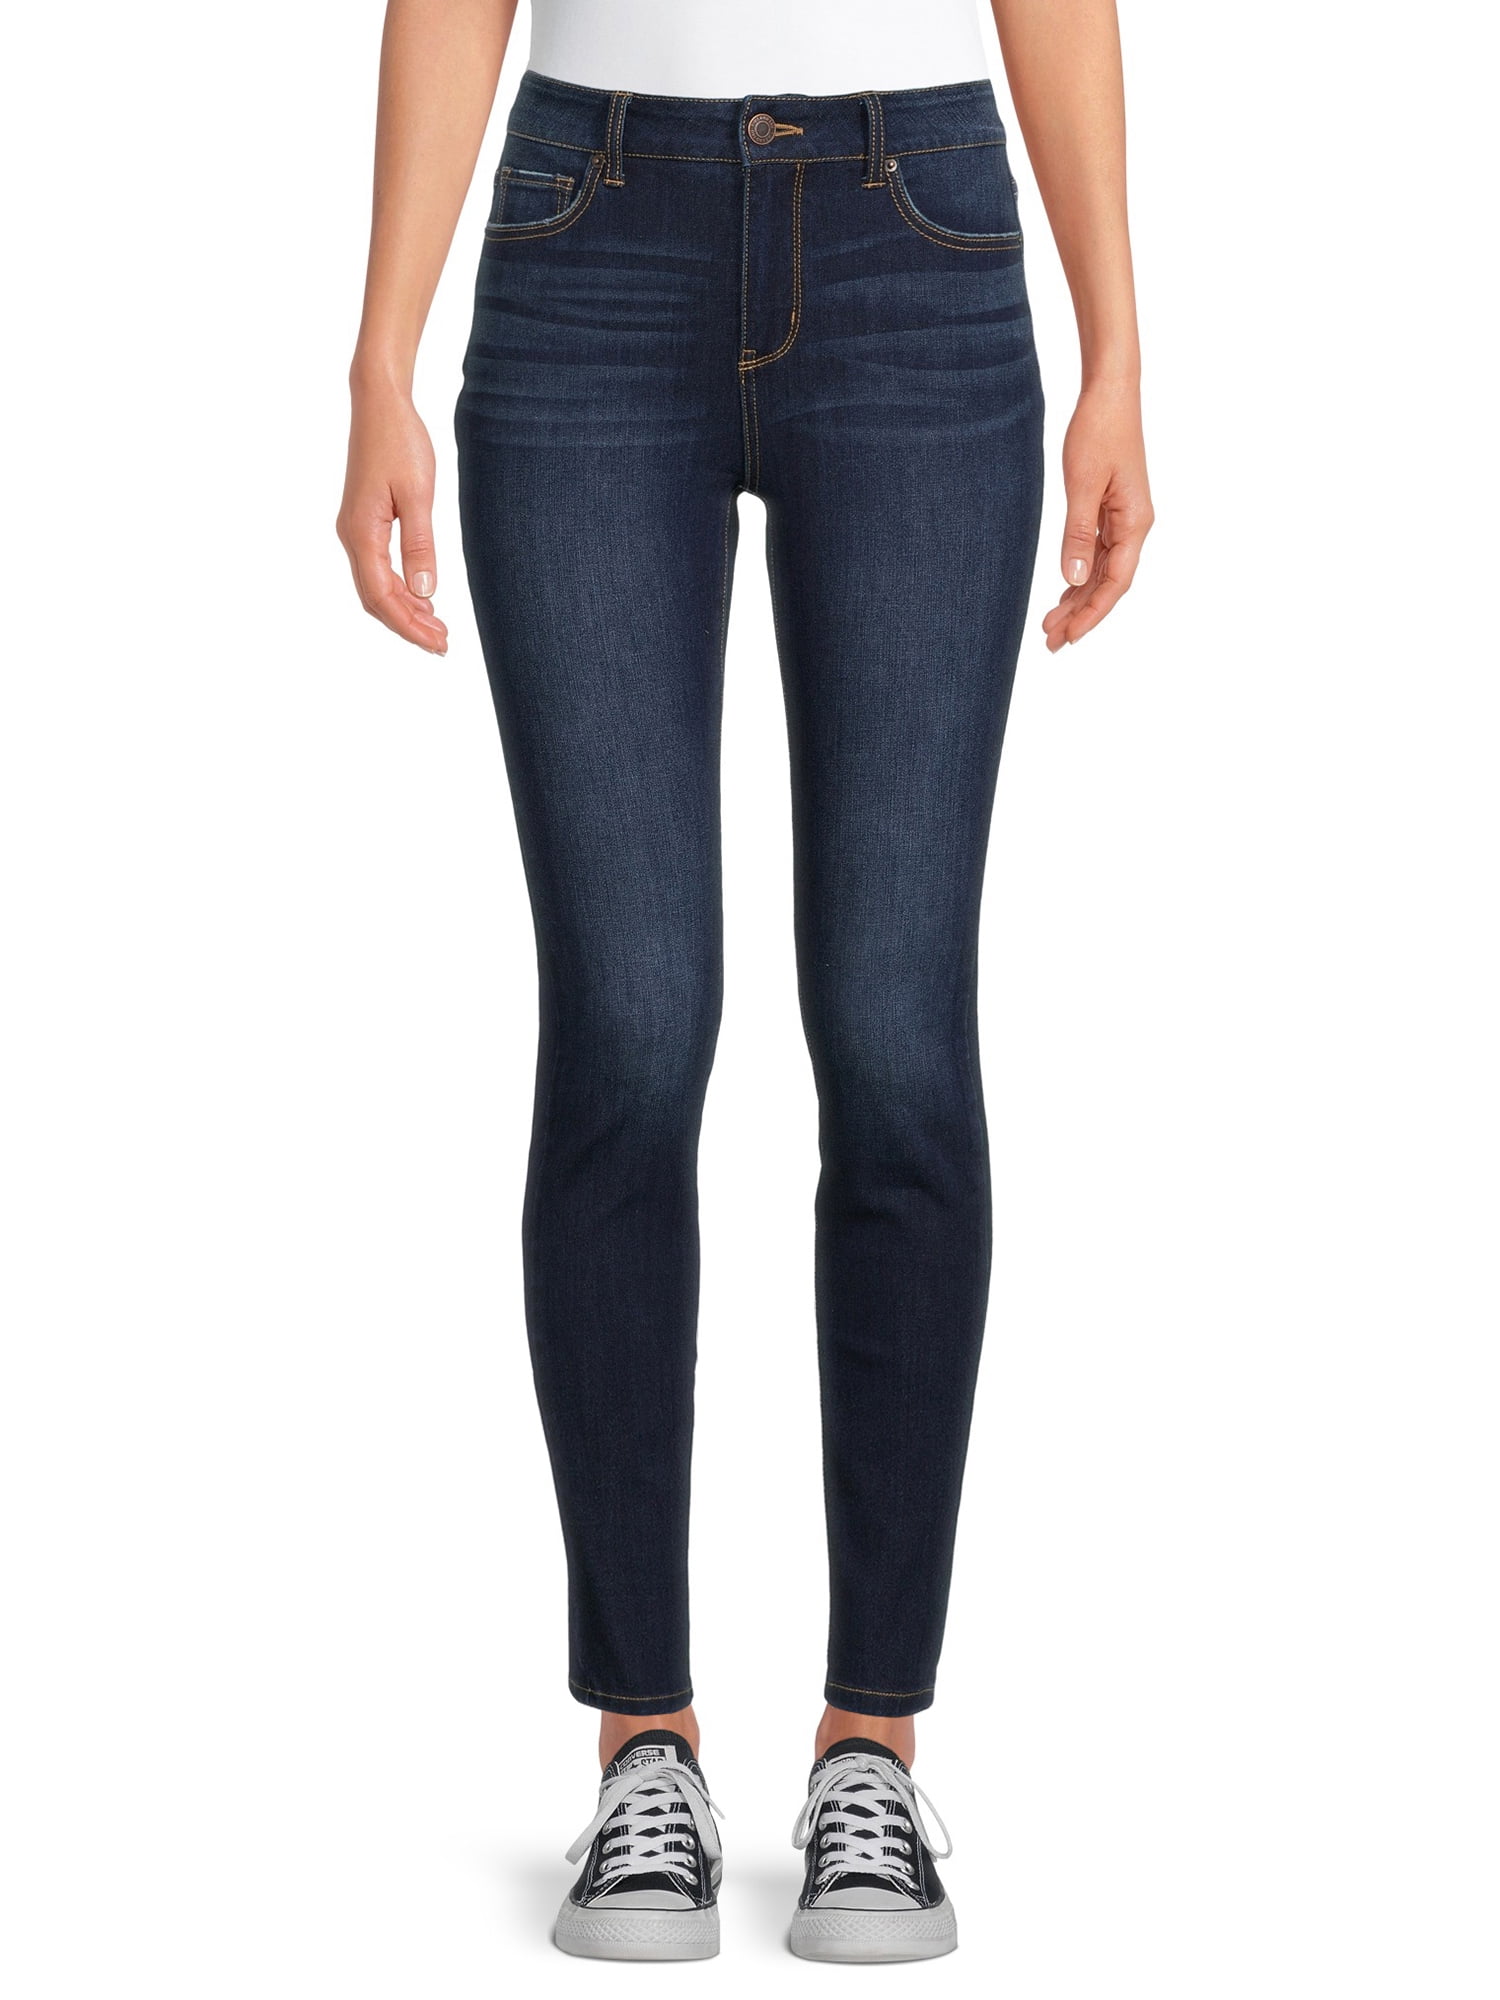 Women's High Waist Premium Denim Super Stretch Skinny Jeans with Spandex 